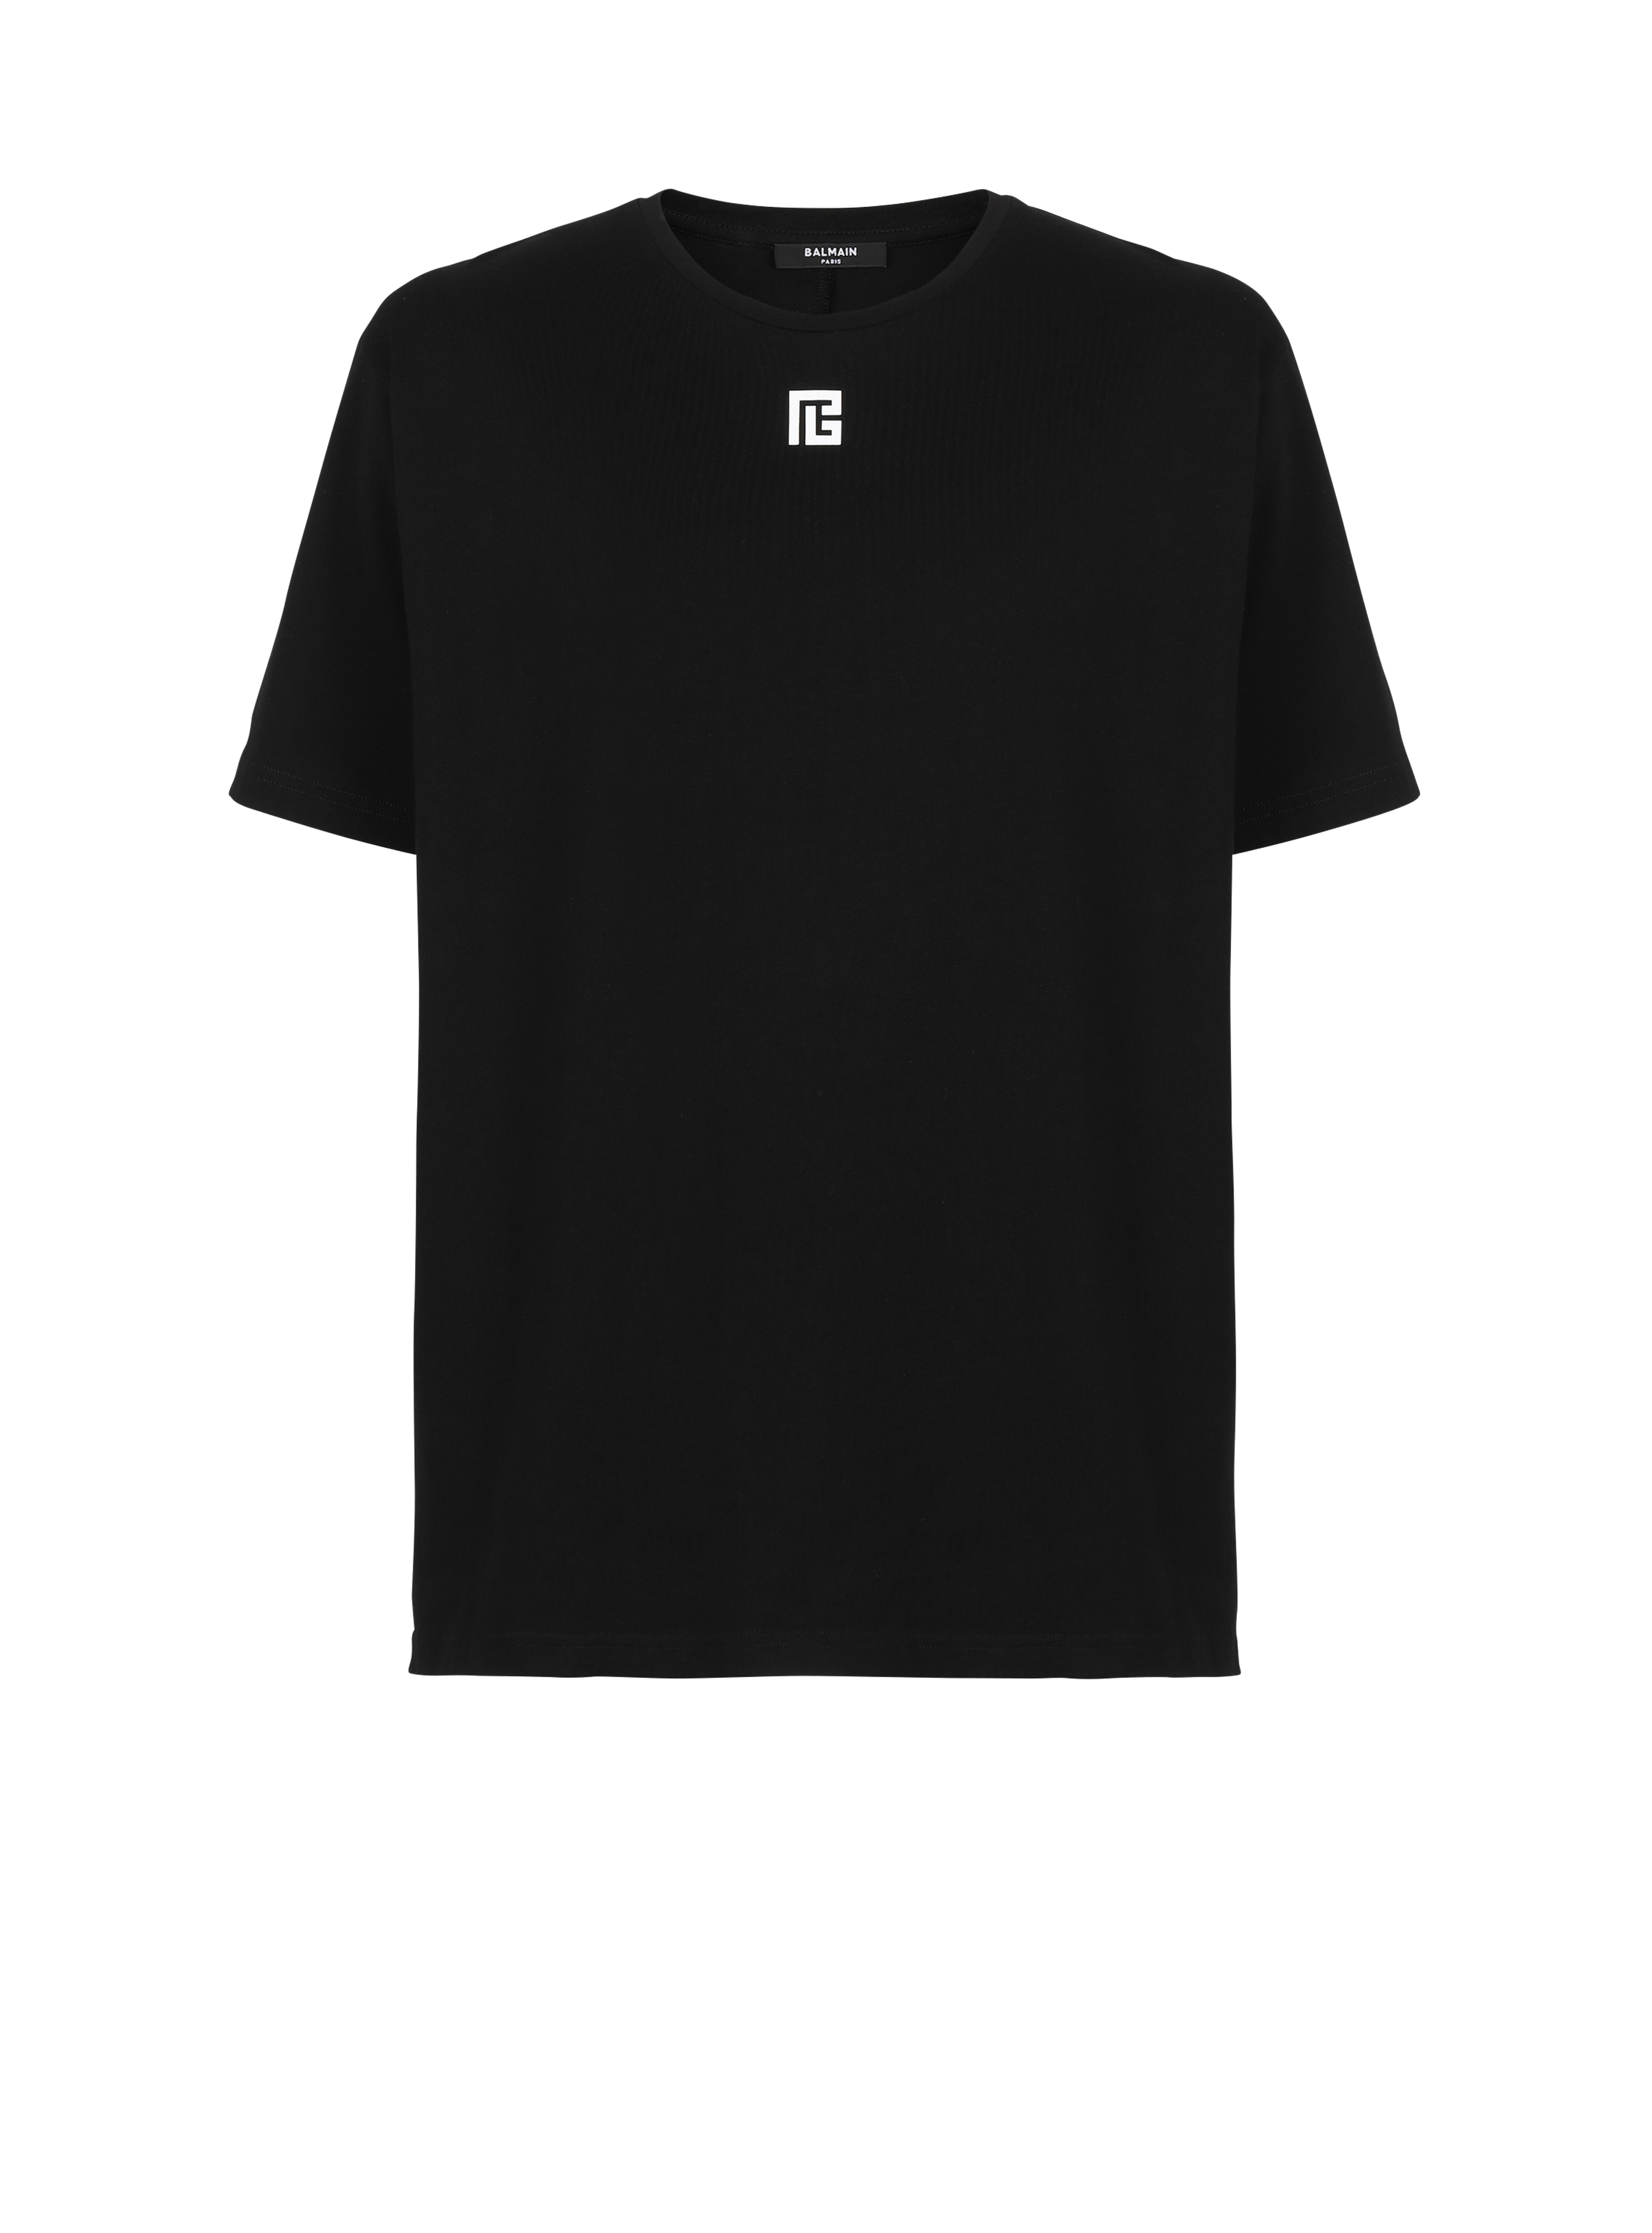 Oversized cotton T-shirt with maxi Balmain logo print, black